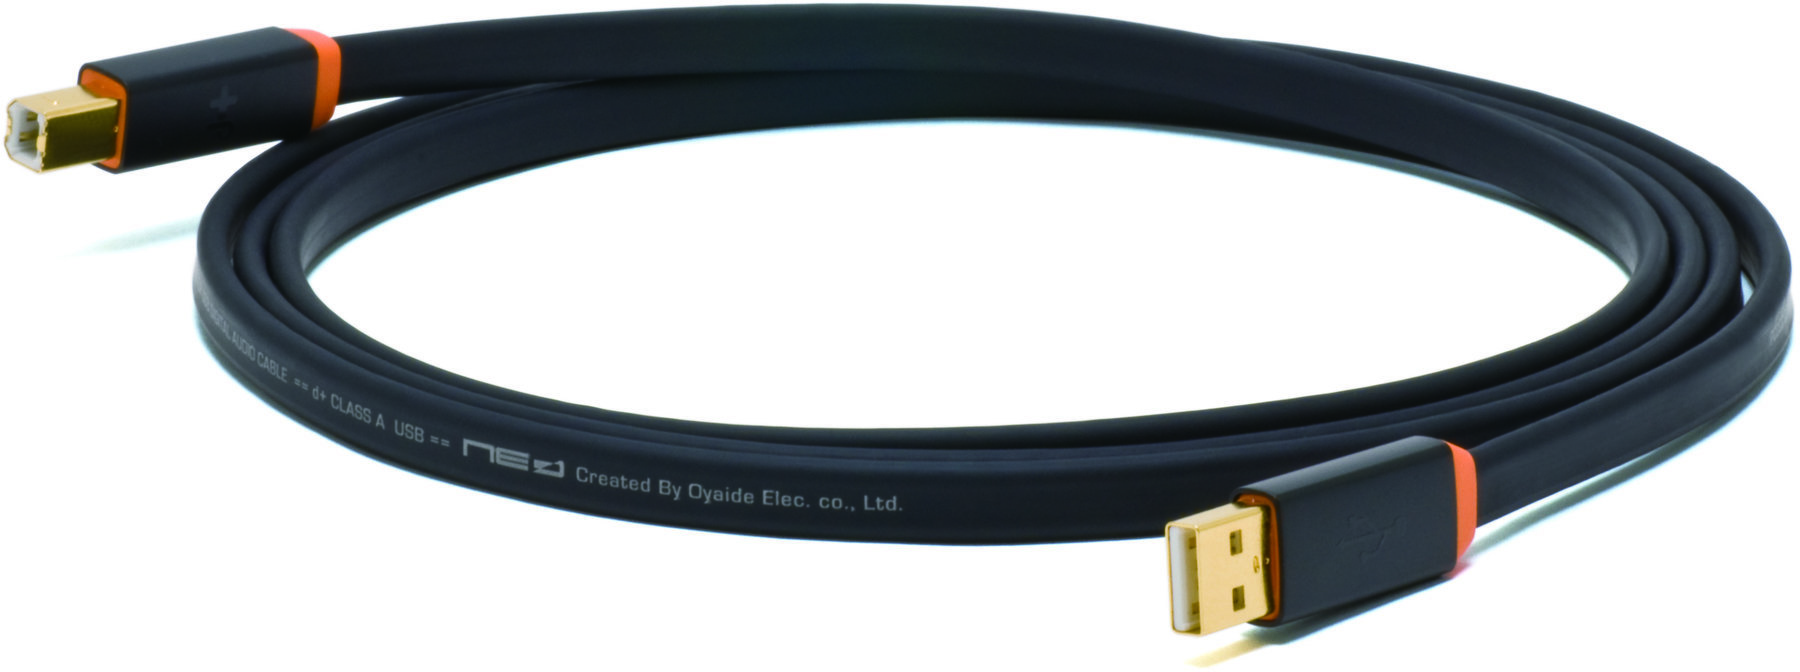 USB kabel Oyaide NEO d+ USB 2.0 Class A 1m